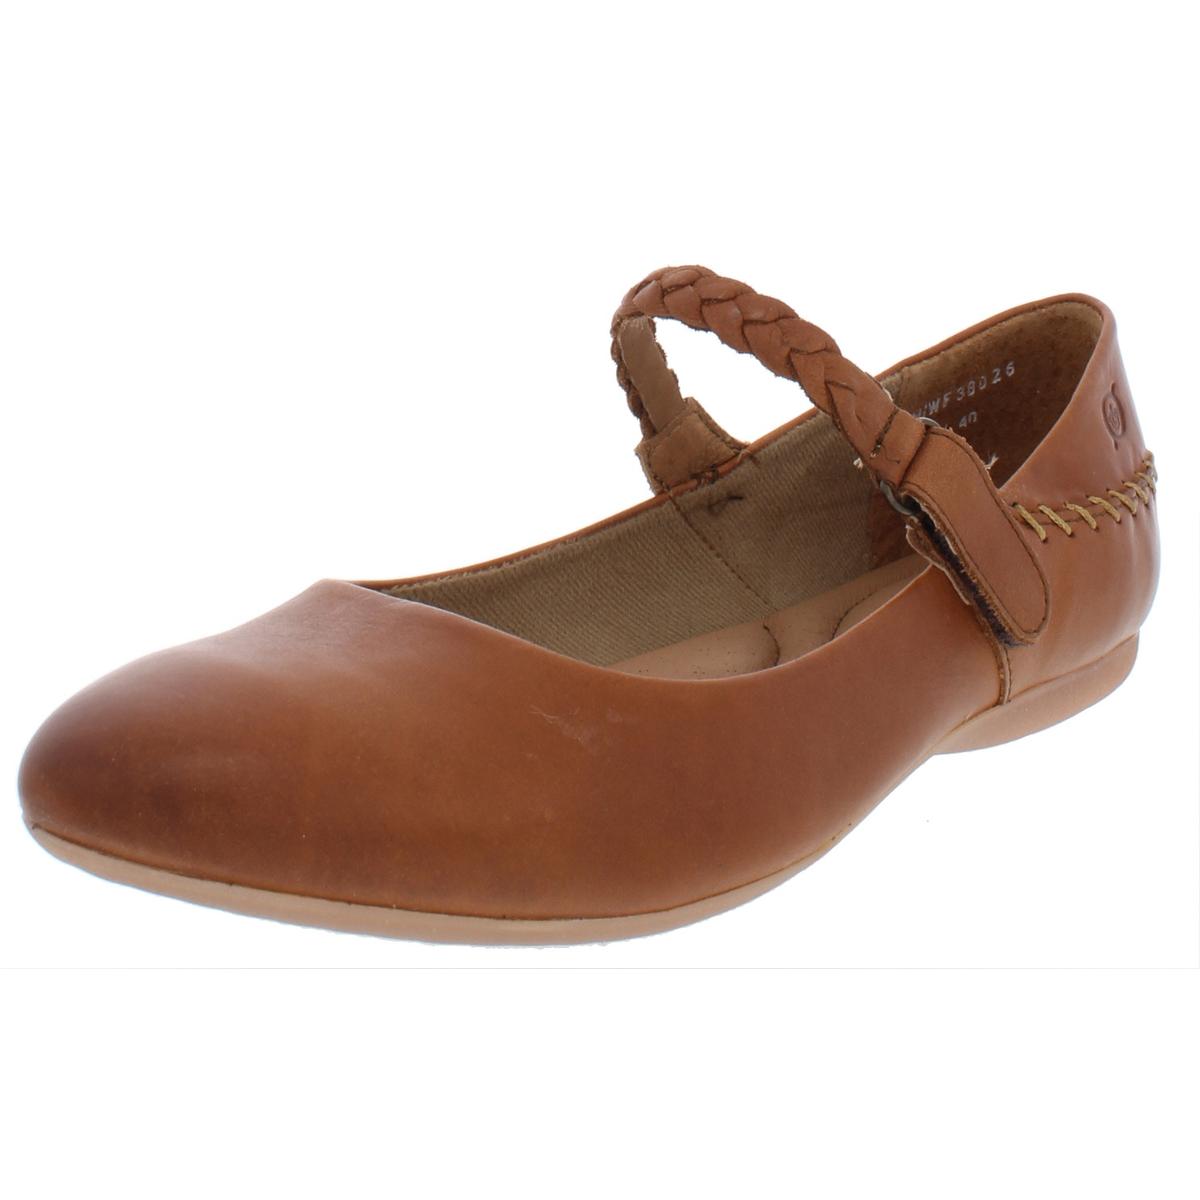 Born Womens Maarten Brown Leather Dress Flats Shoes 8 Medium (B,M) BHFO ...